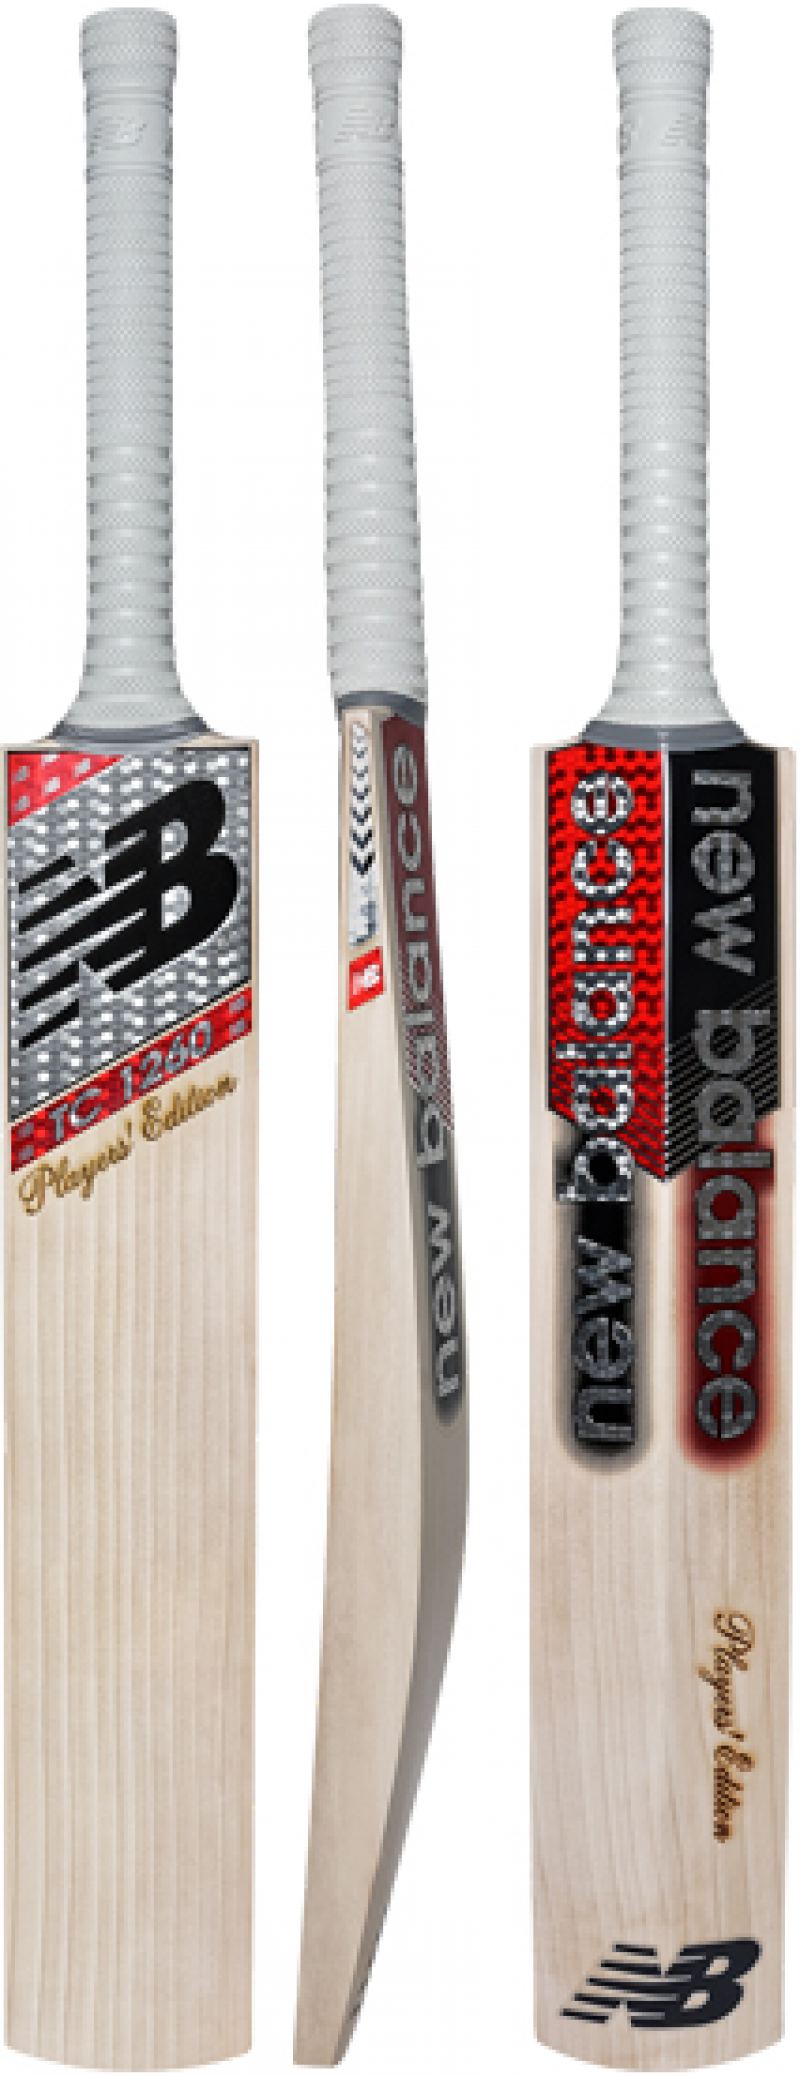 new balance tc 1260 limited edition cricket bat